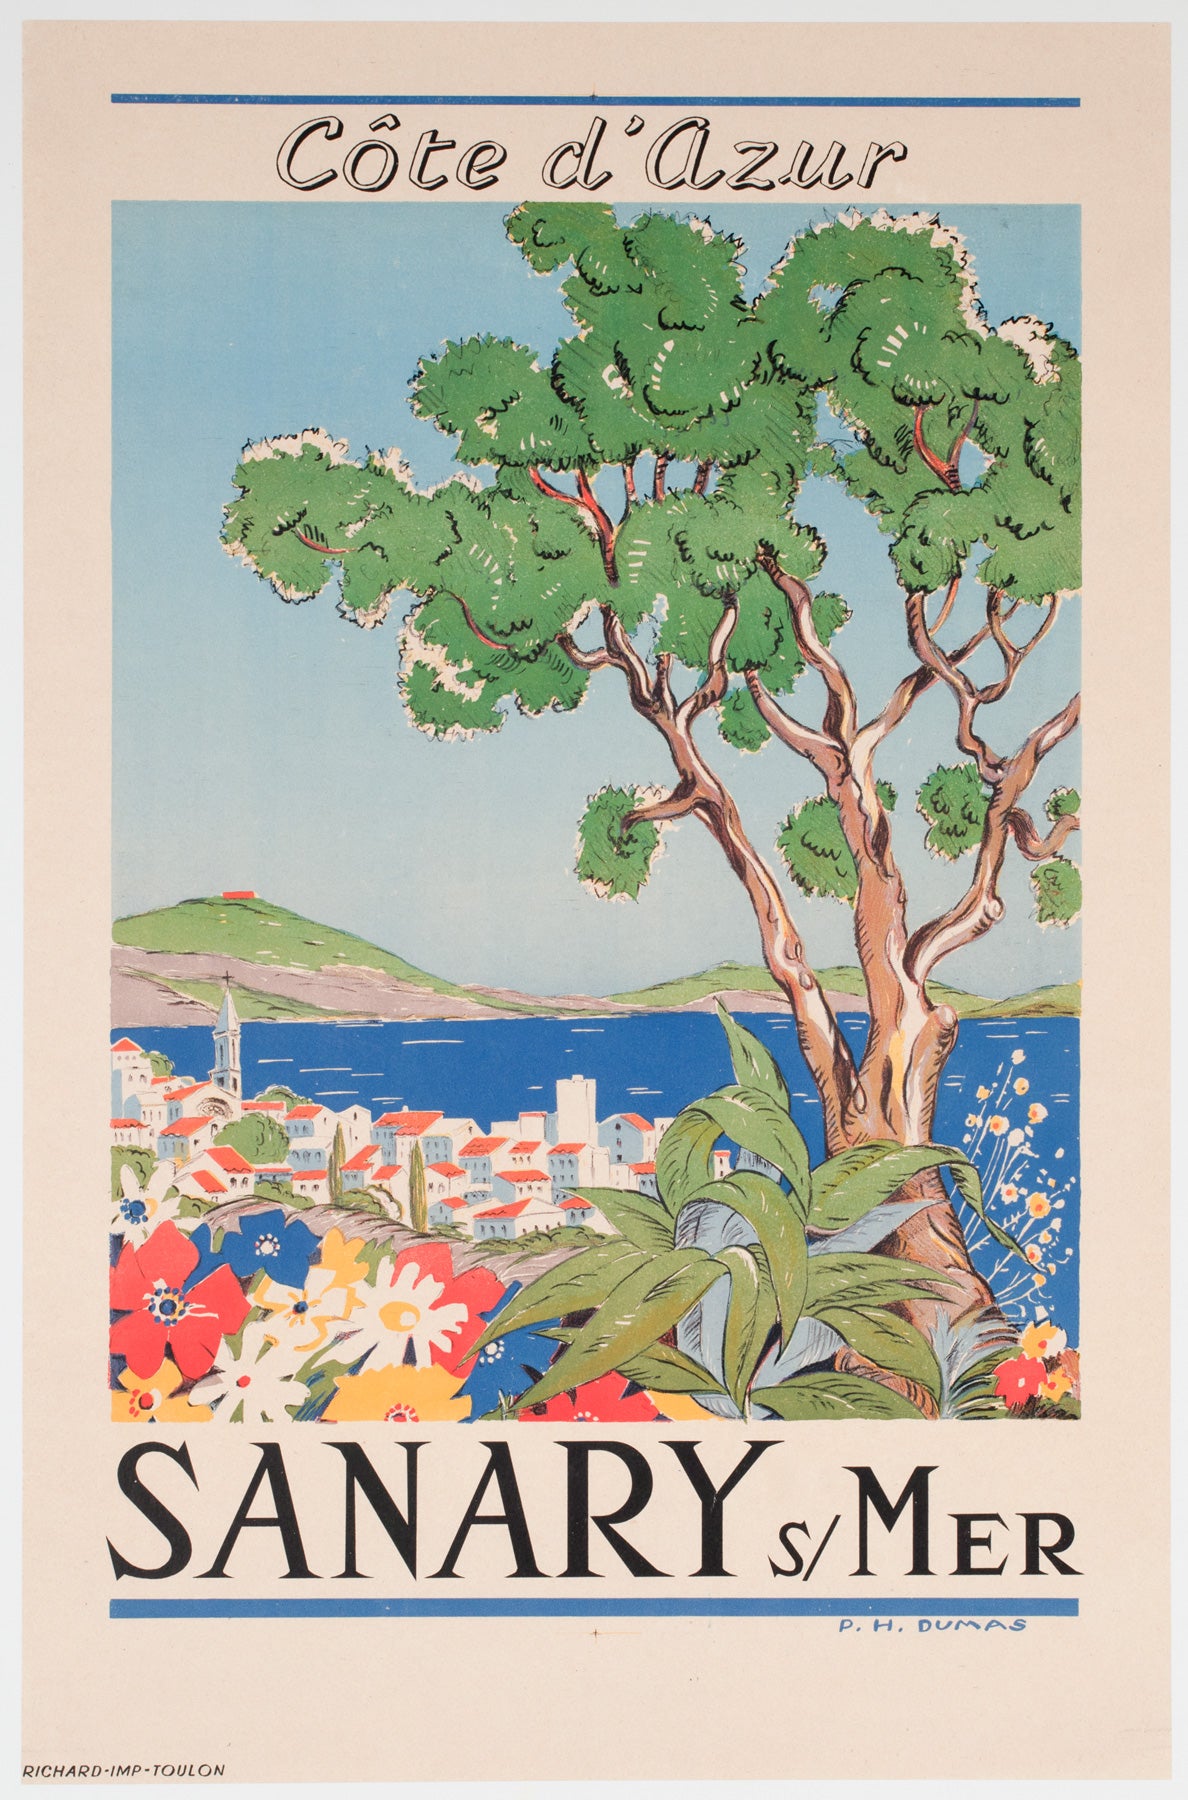 Cote D'Azur Sanary sur Mer 1950s Travel Advertising Poster